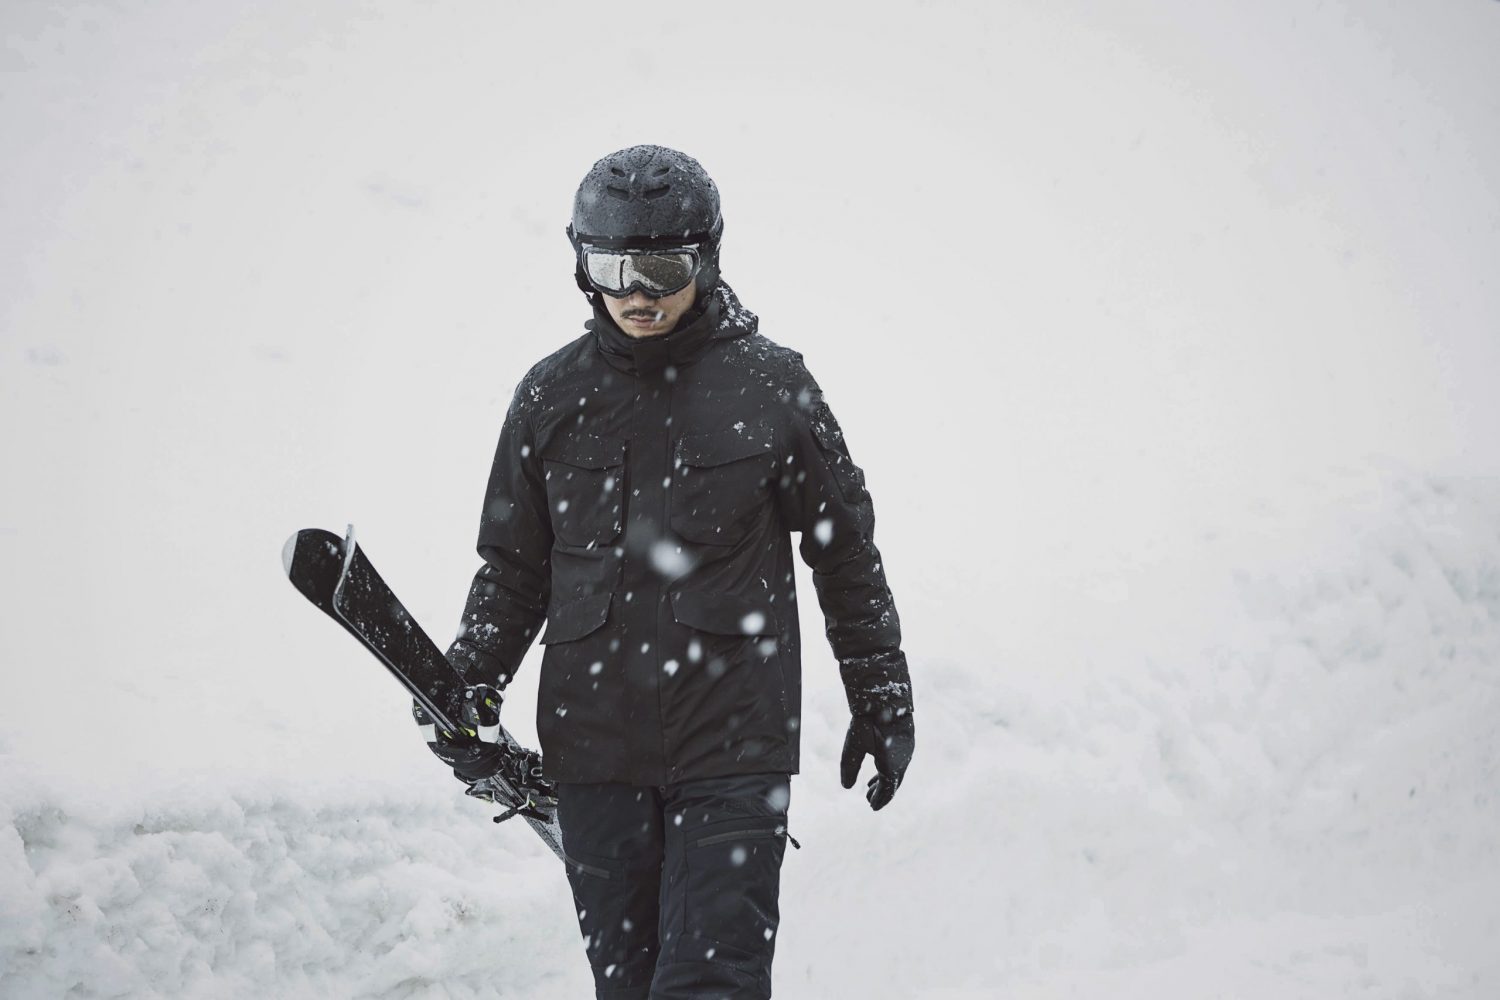 「F70 URBAN EXPLORER JACKET」を着用して雪の中をスキー板を持って歩く